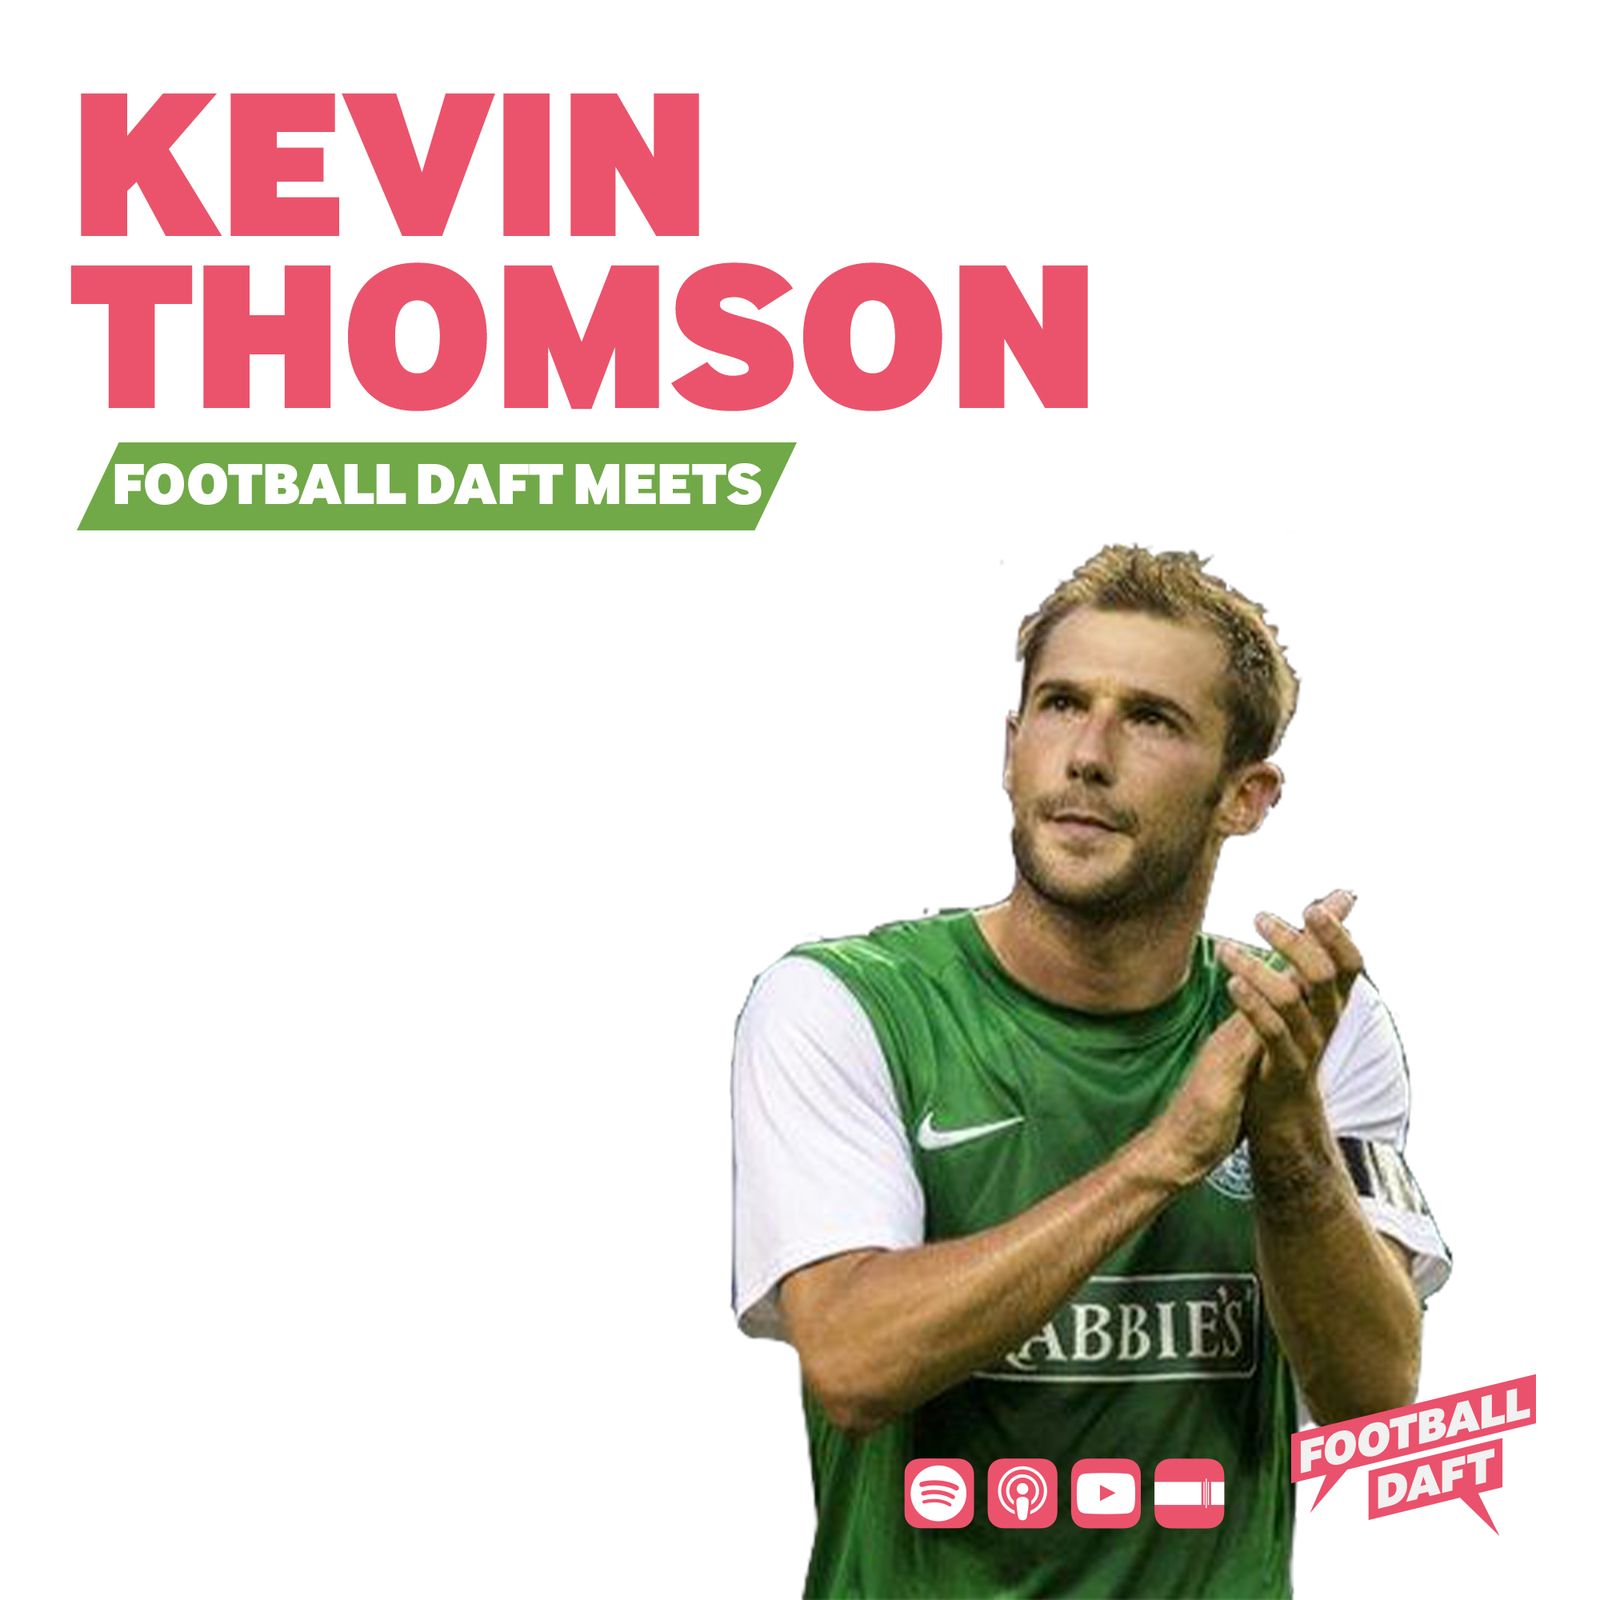 136: Football Daft Meets... Kevin Thomson